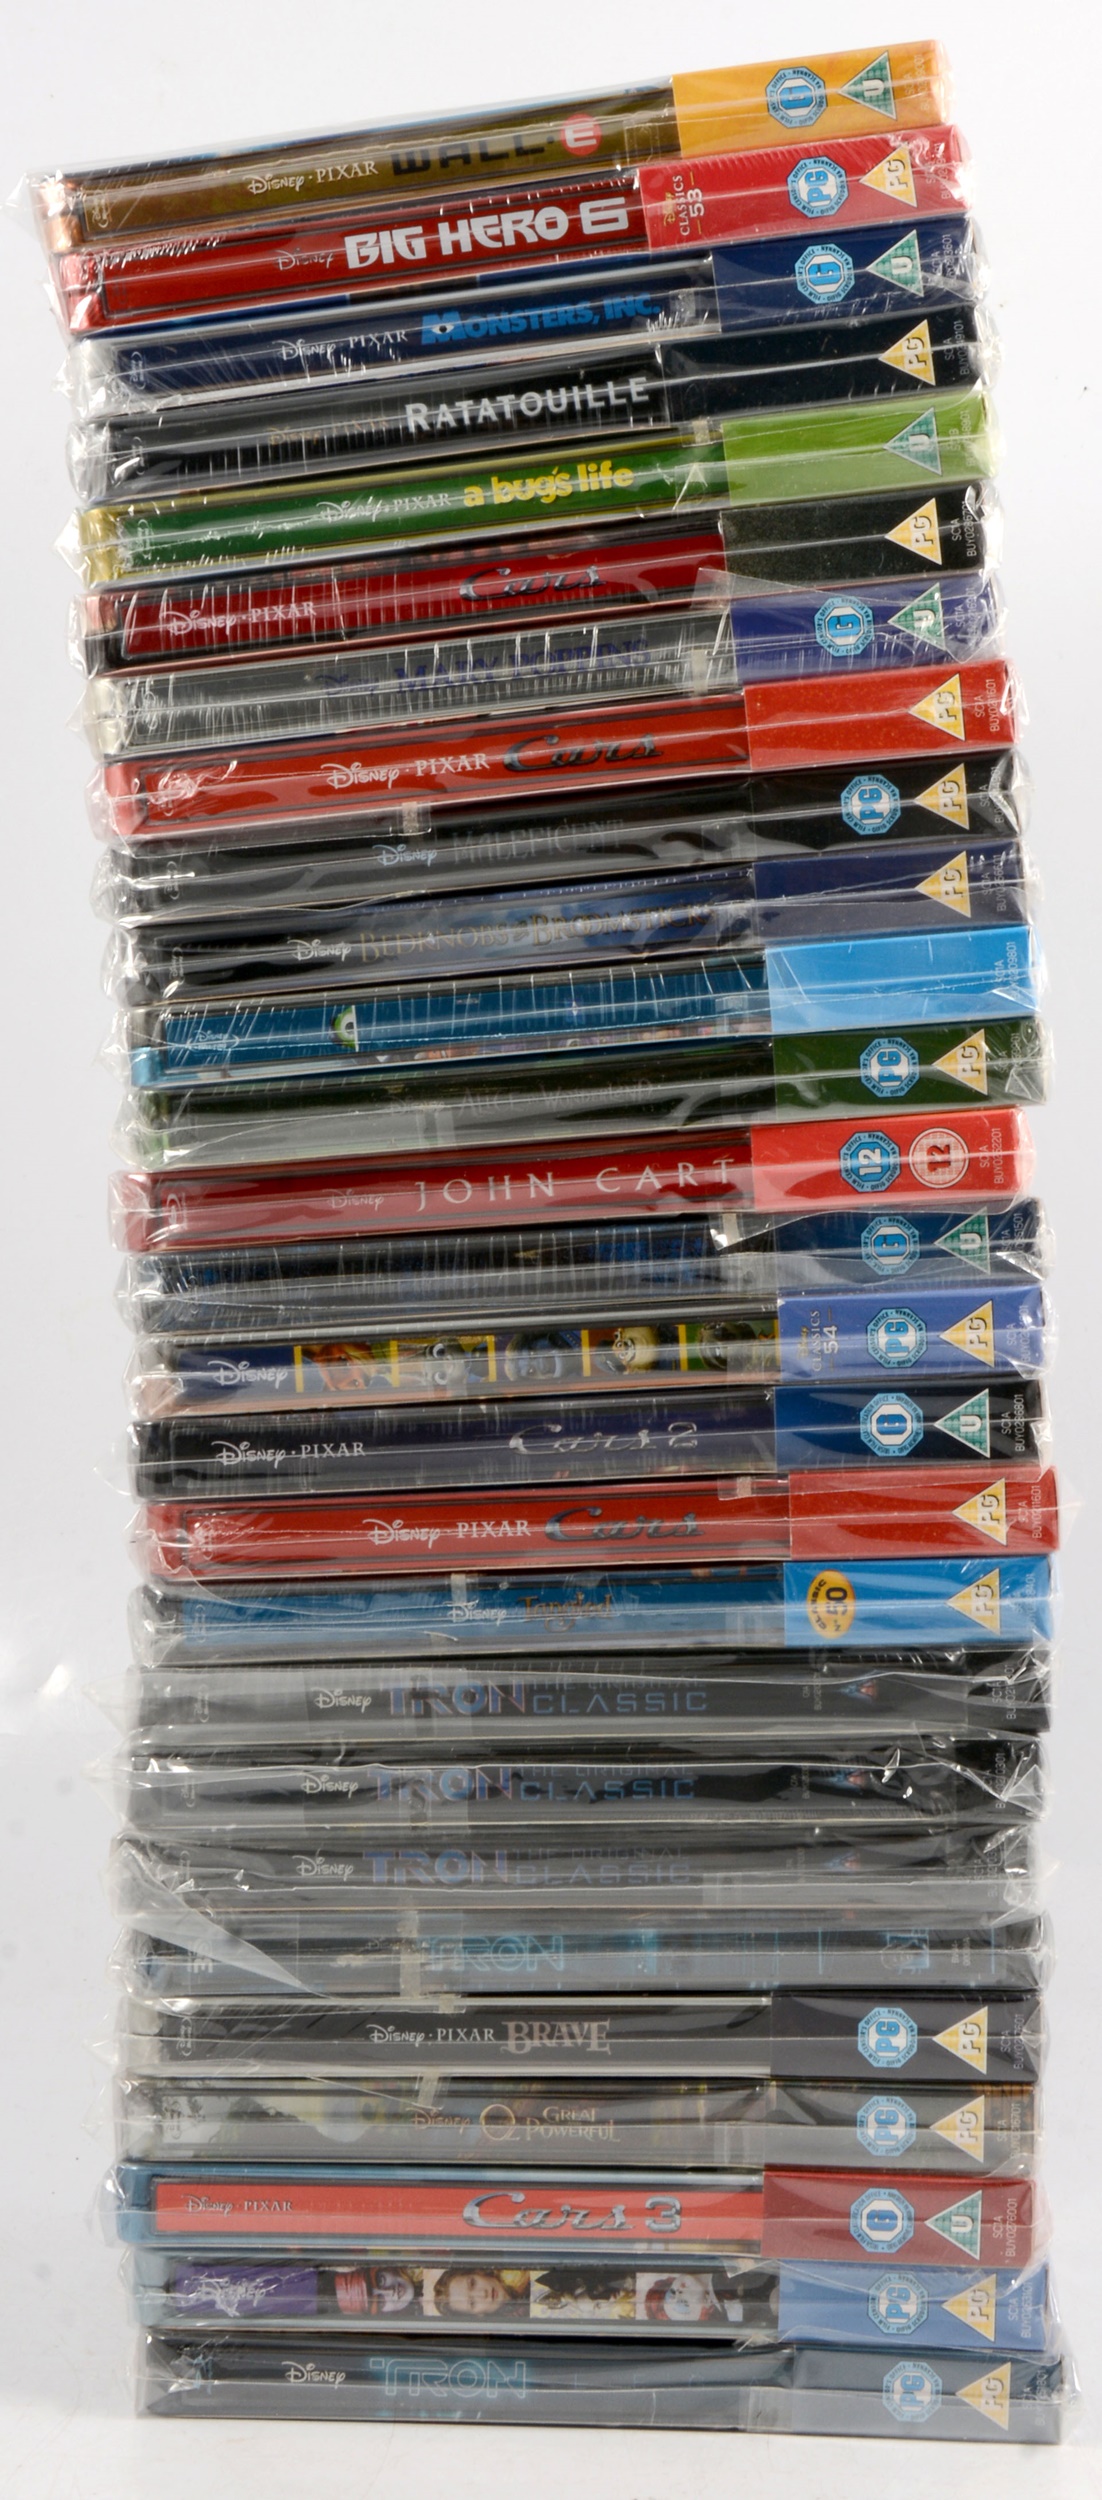 Steelbook Blue-ray selection, twenty-seven mostly Disney films including Wall-E etc